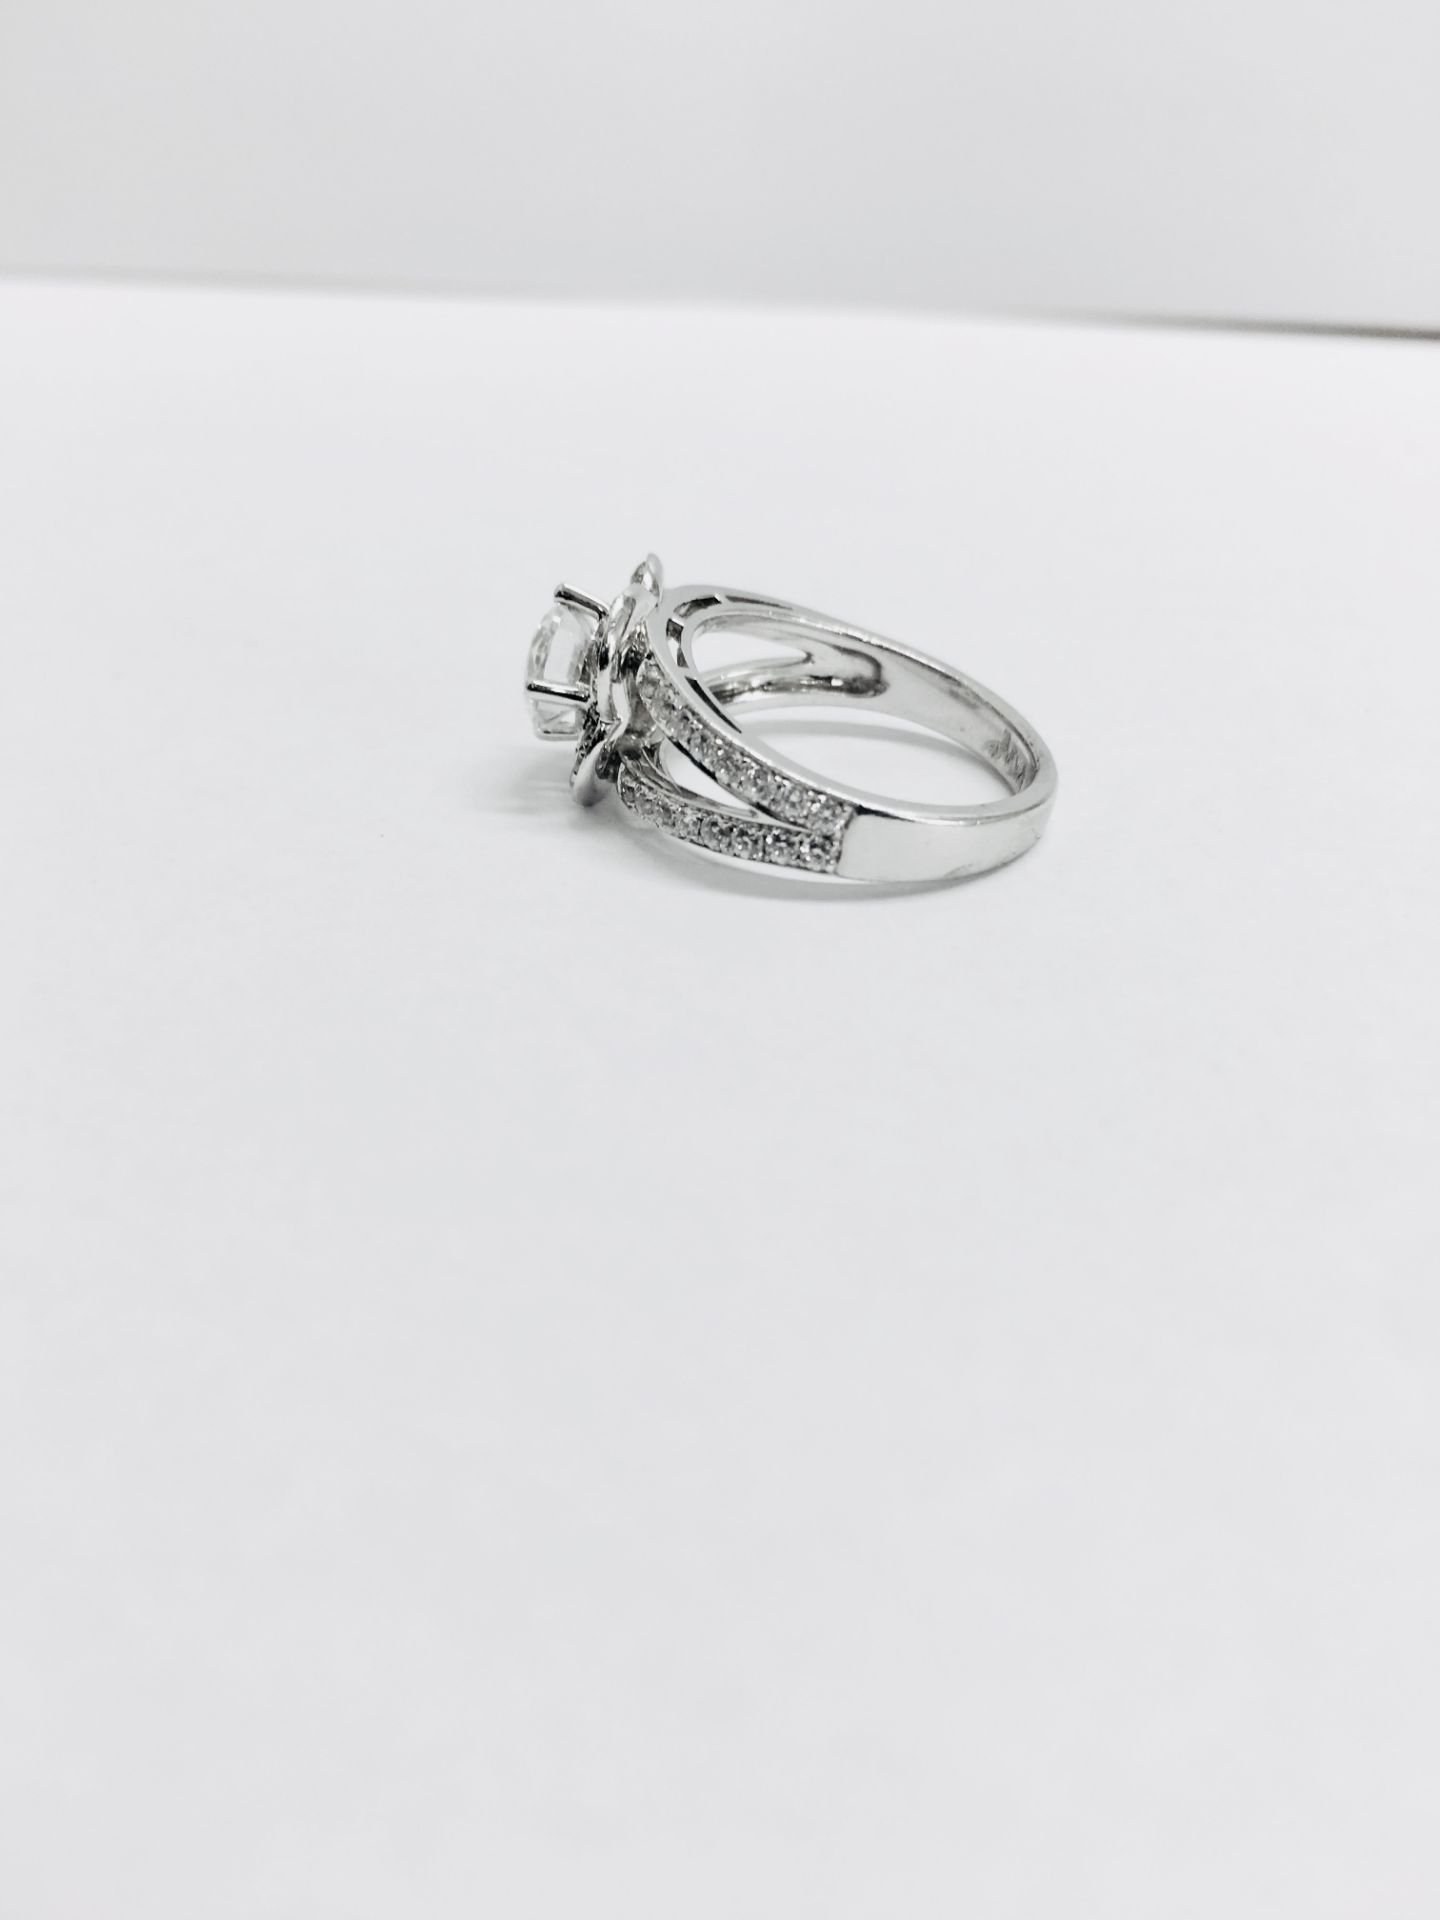 Platinum Fancy design solitaire ring,0.50ct D colour vs clarity , natural brilliant cut diamond,5. - Image 4 of 6